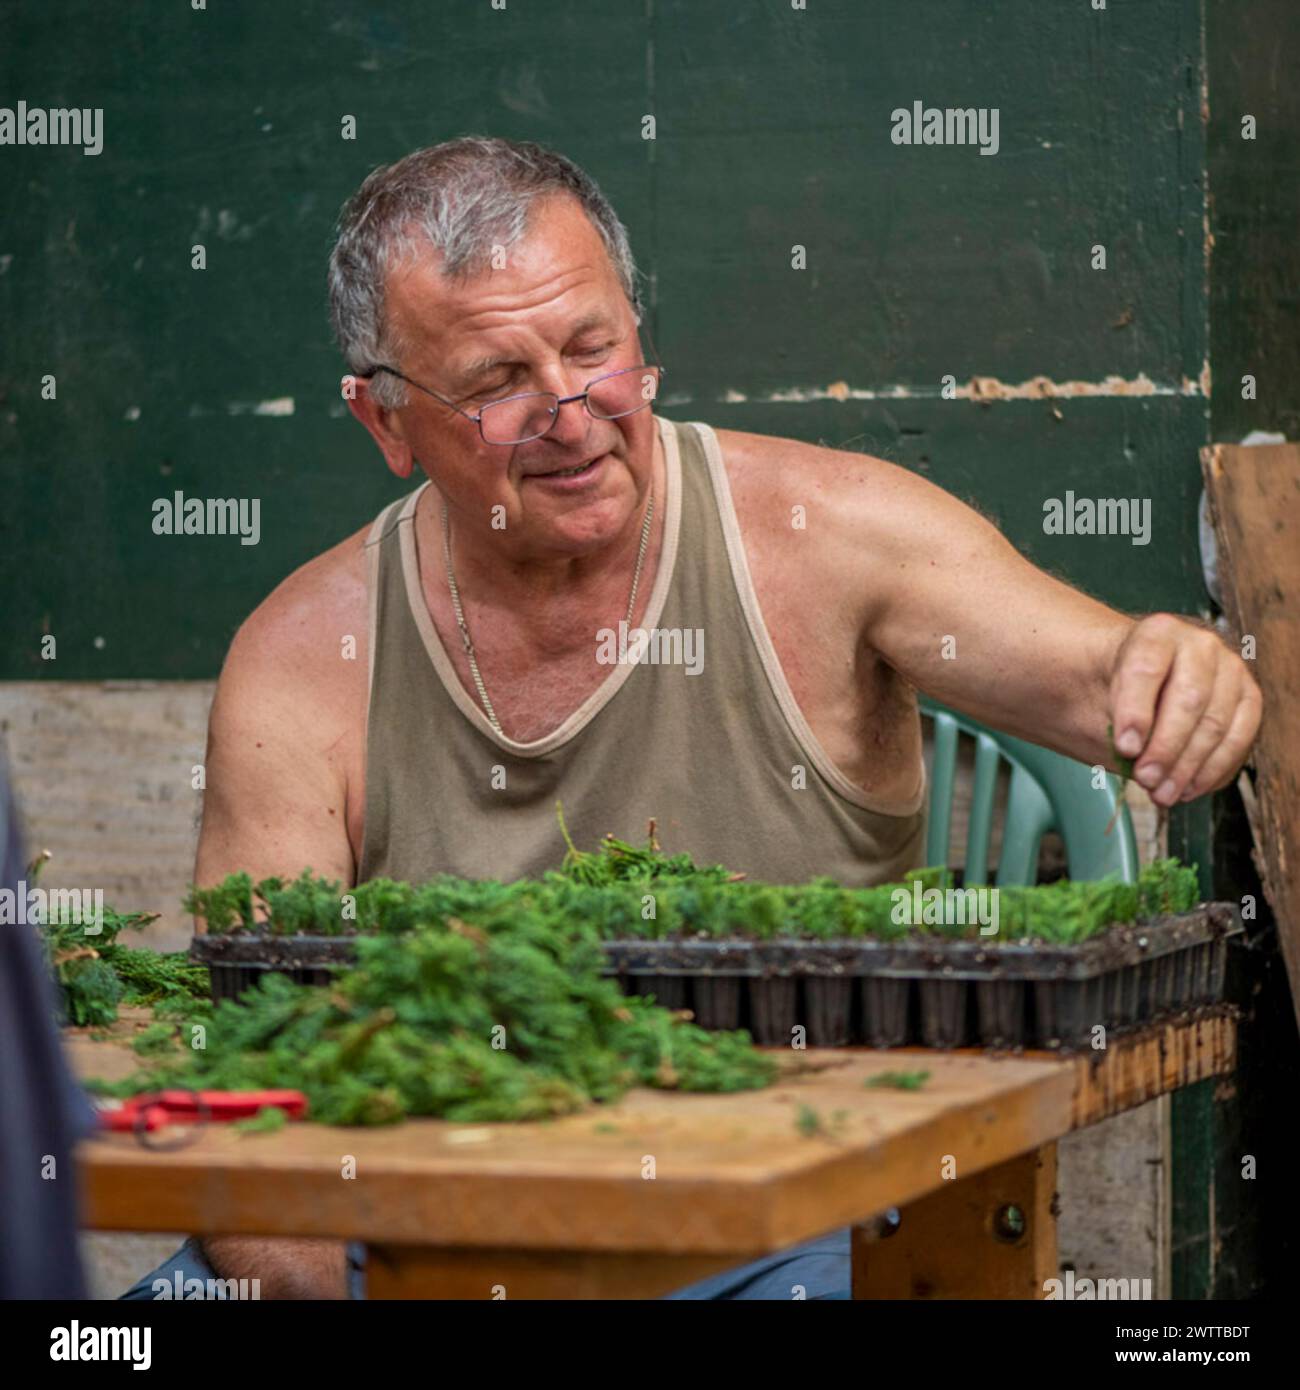 Elderly man enjoying gardening work, with a focus on small plants. Stock Photo